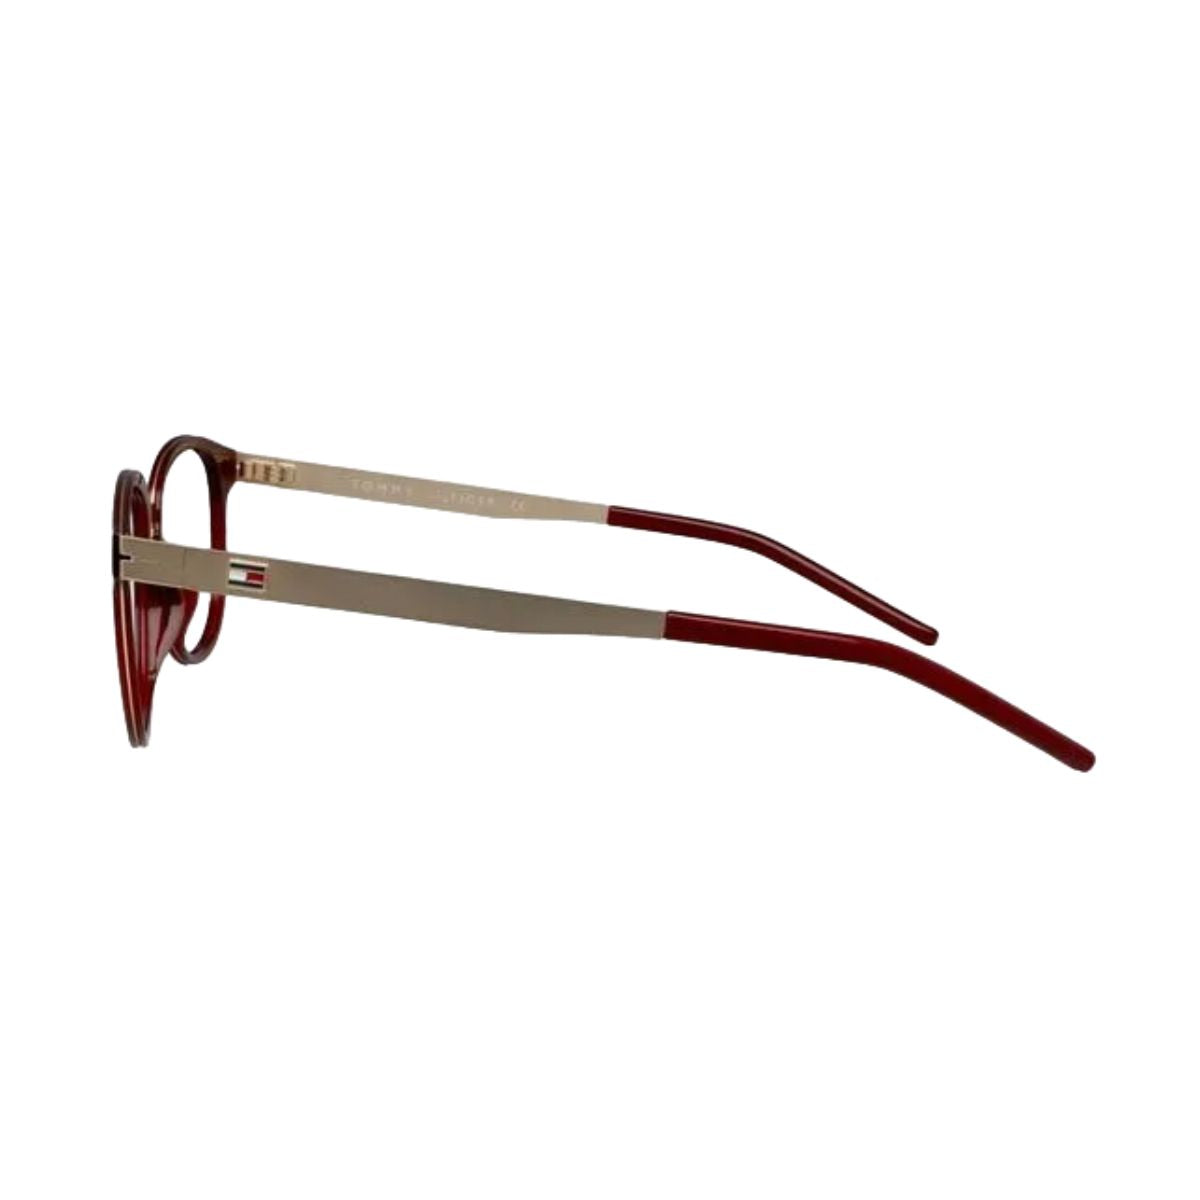 "Tommy Hilfiger 6005 C2 eyewear frame for men's and women's online at optorium"